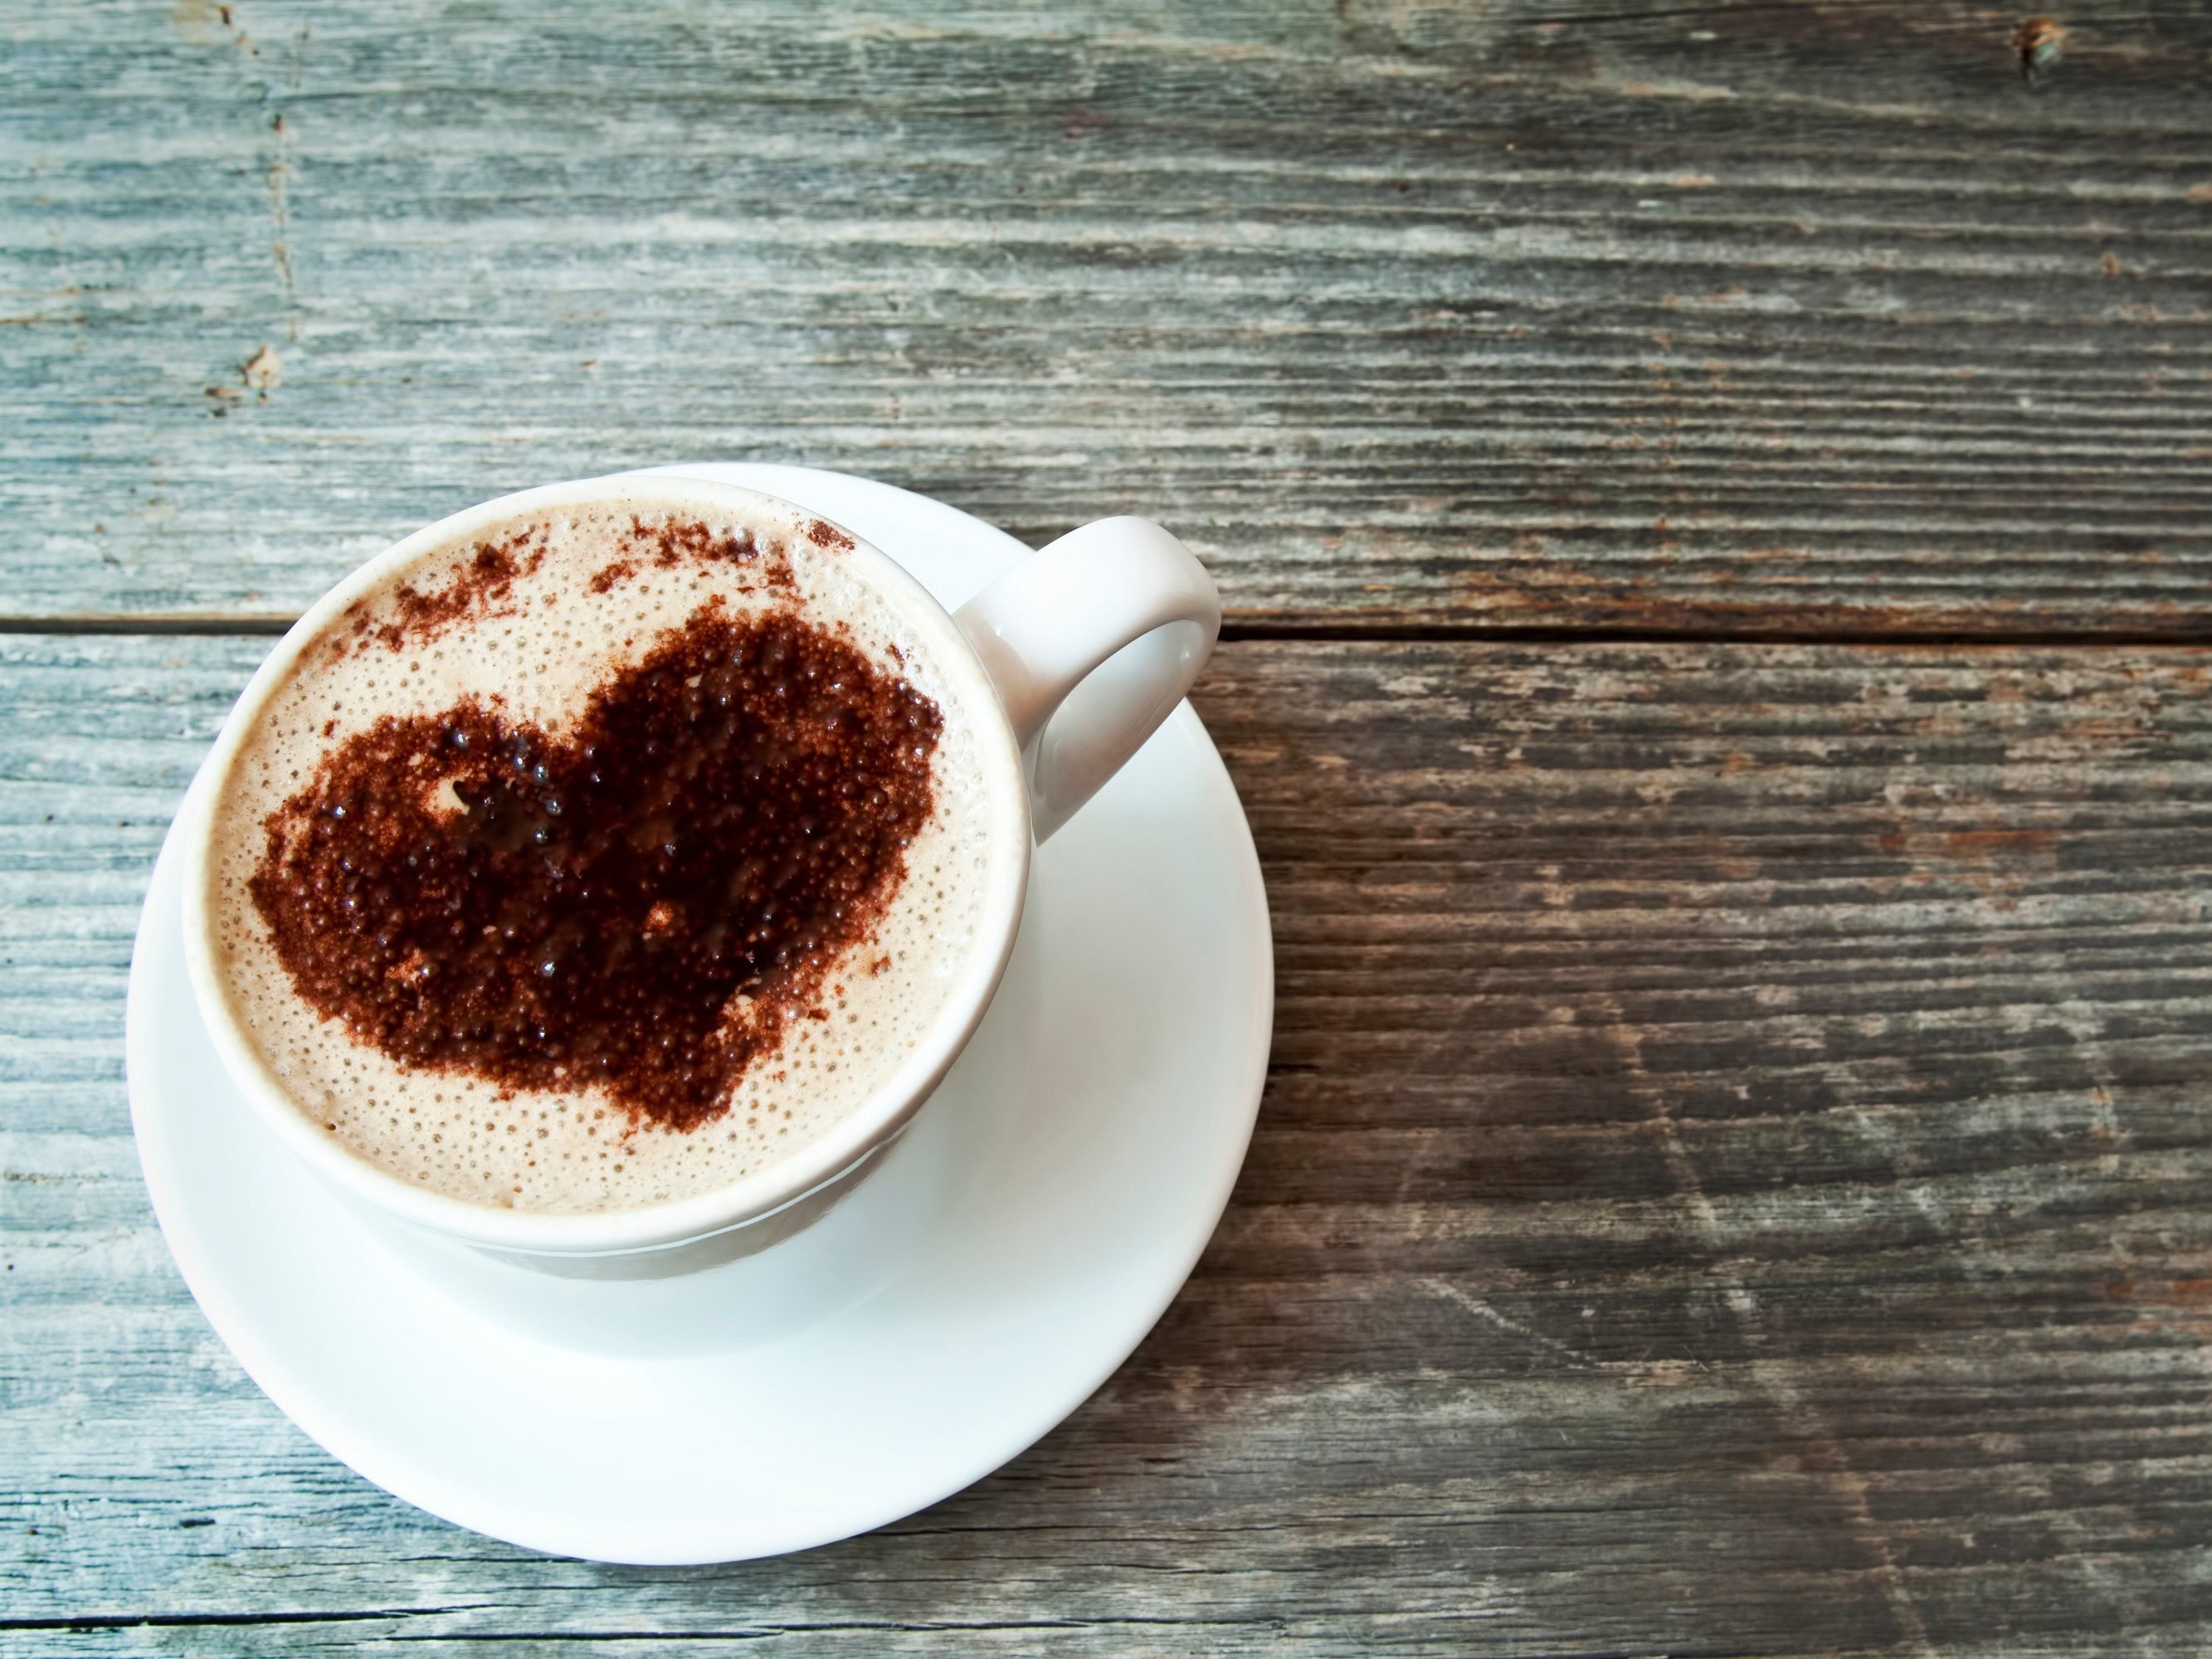 Tips for a Calorie-Conscious Coffee Break